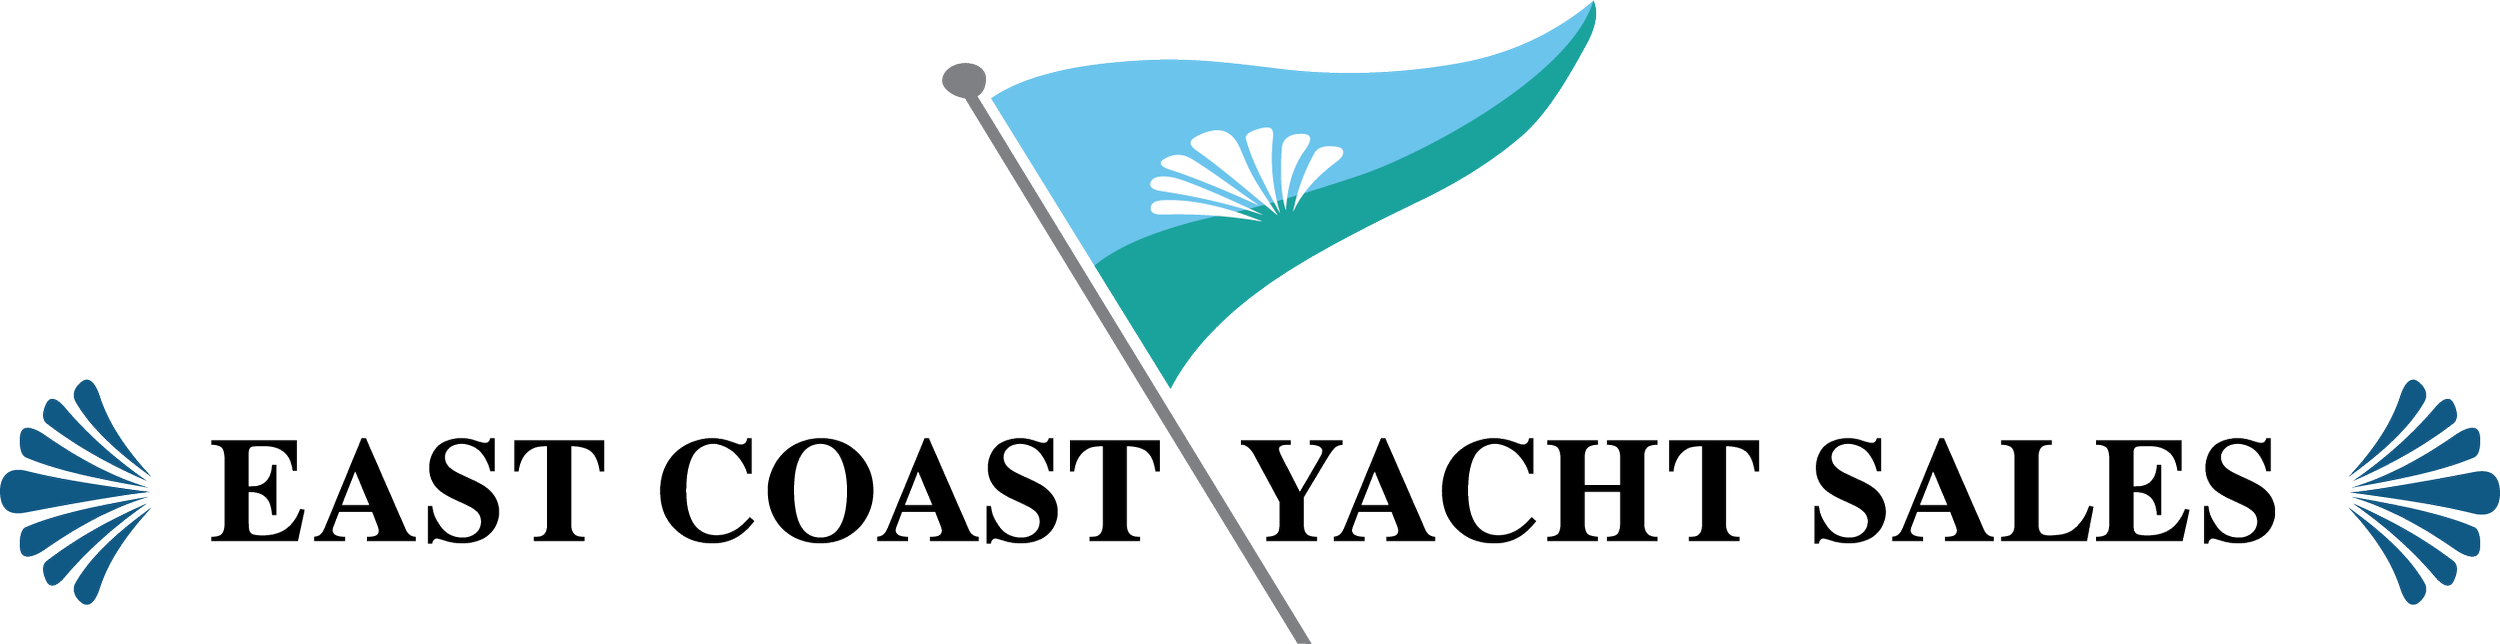 East_Coast_Yacht_Sales_Logo-1.png